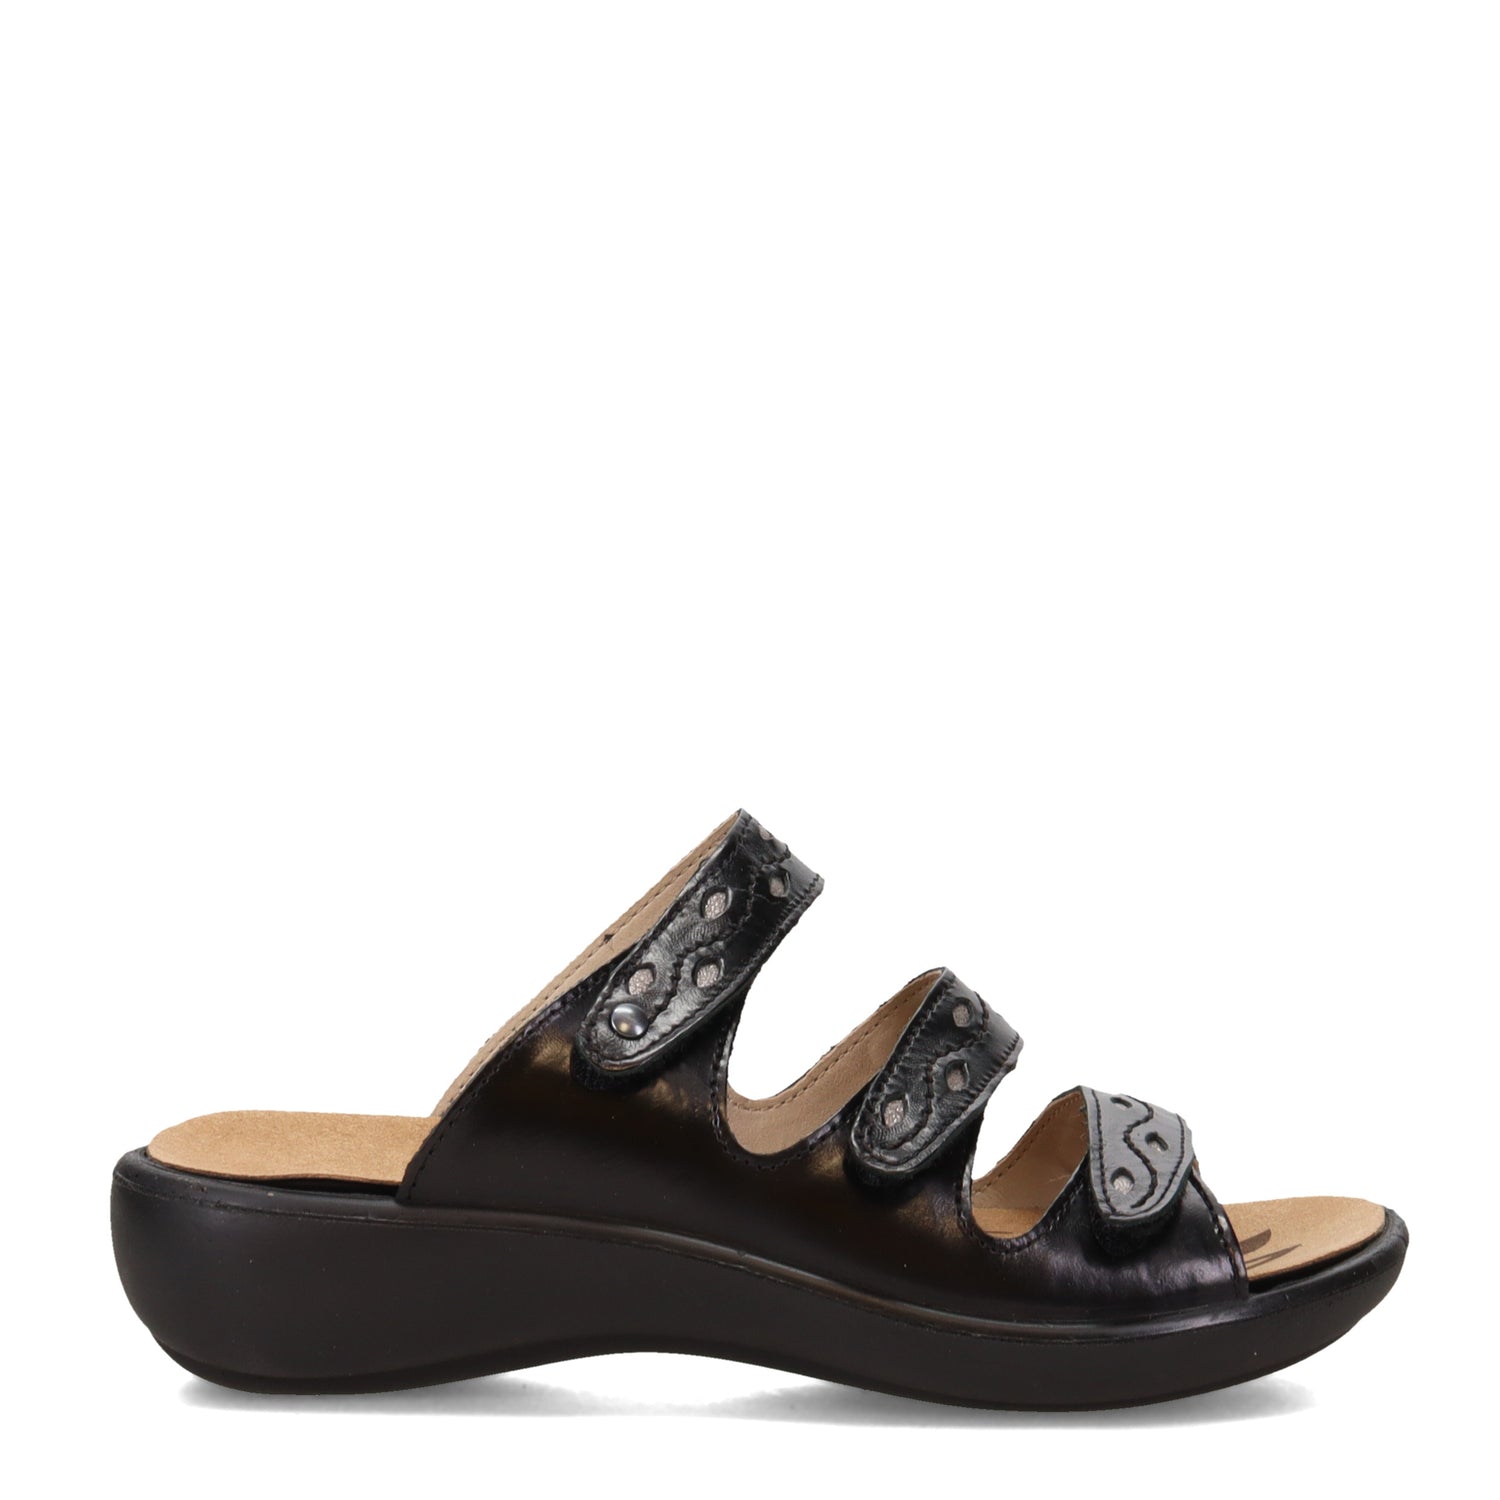 Peltz Shoes  Women's Romika Ibiza 66 Sandal BLACK 16066-43100